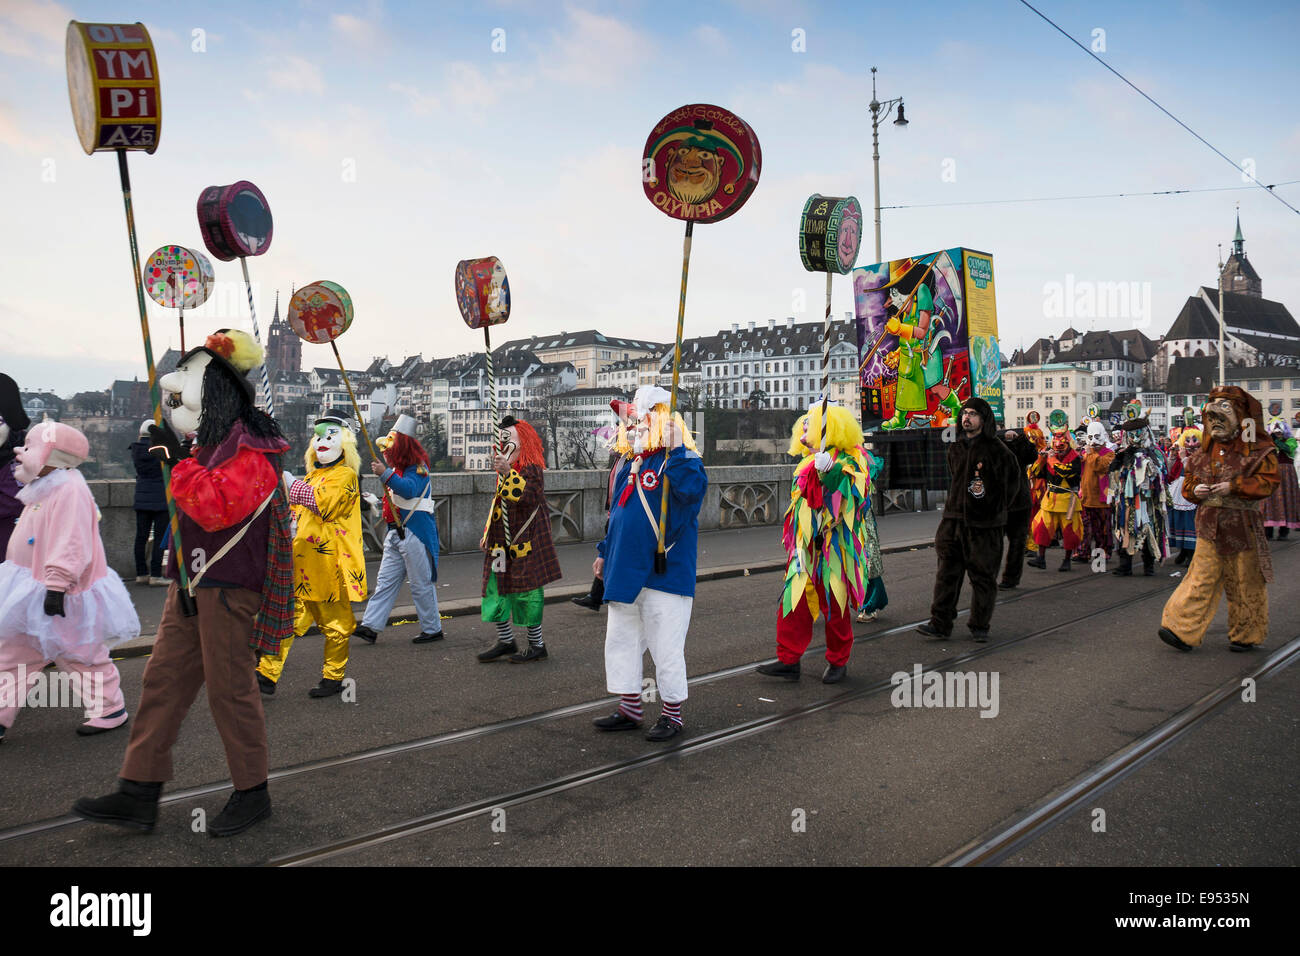 Morgenstraich carnival parade, Basel, Switzerland Stock Photo